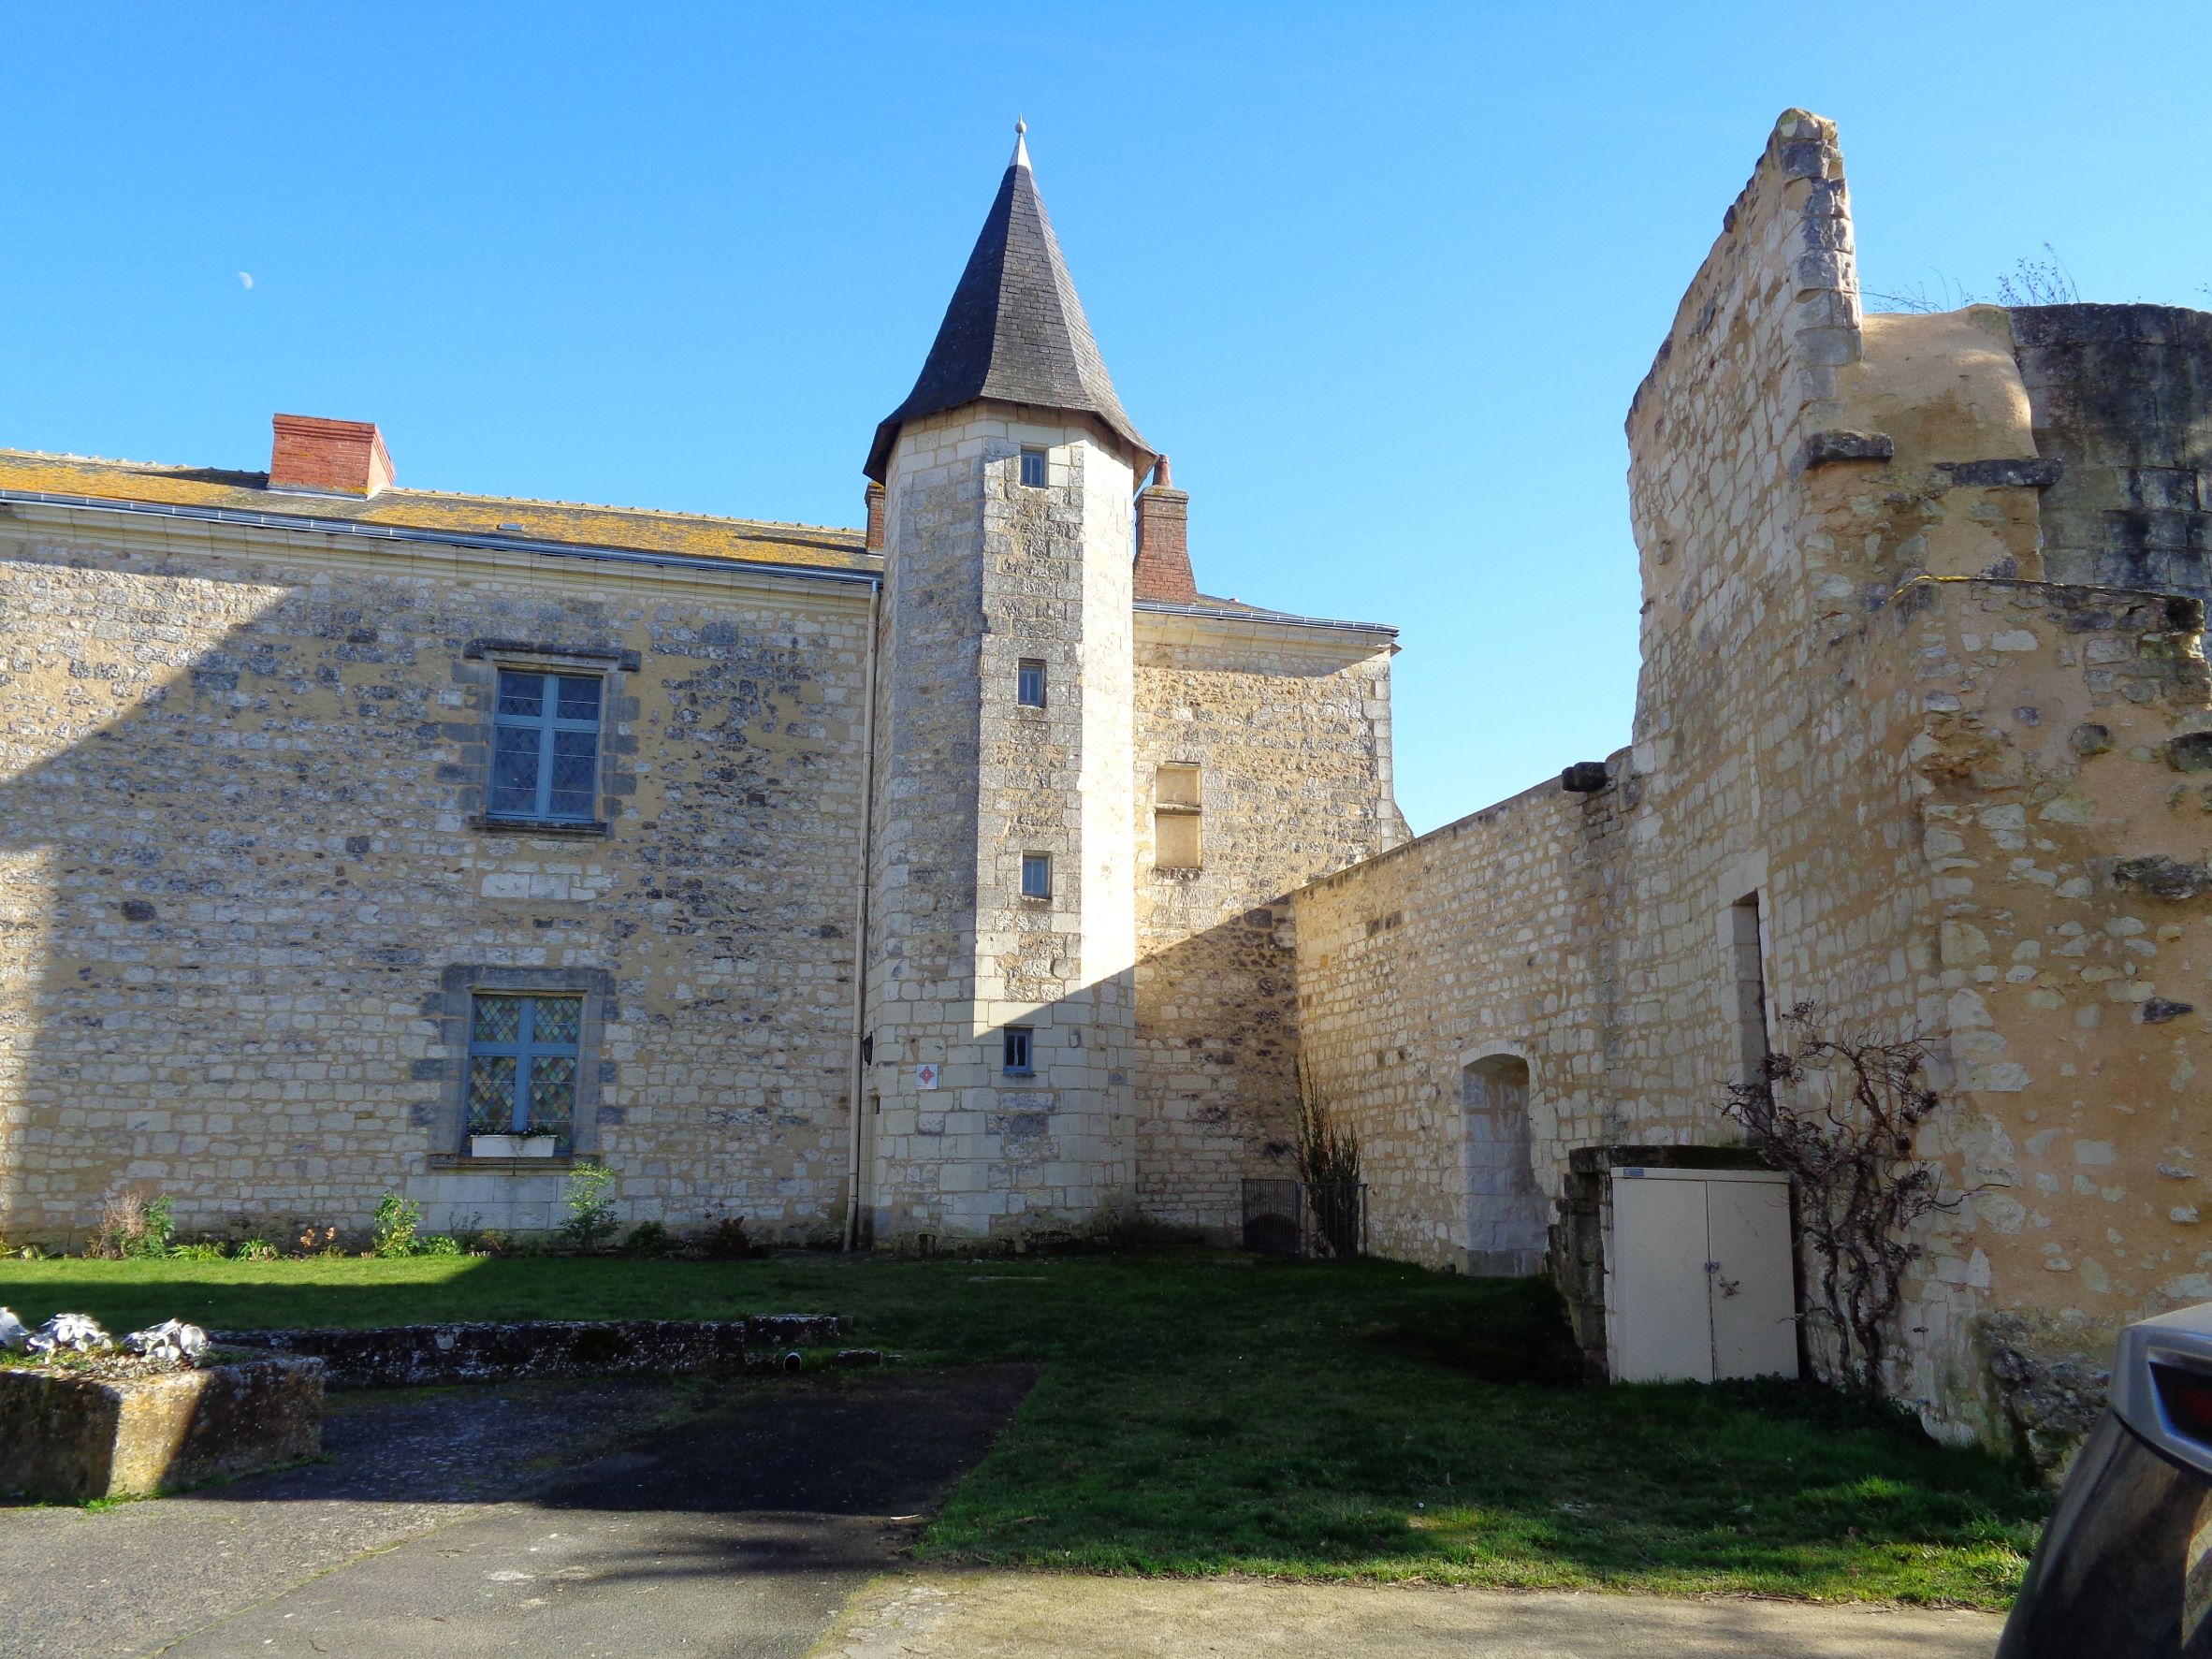 Ste Maure de Touraine chateau rohan tower feb22